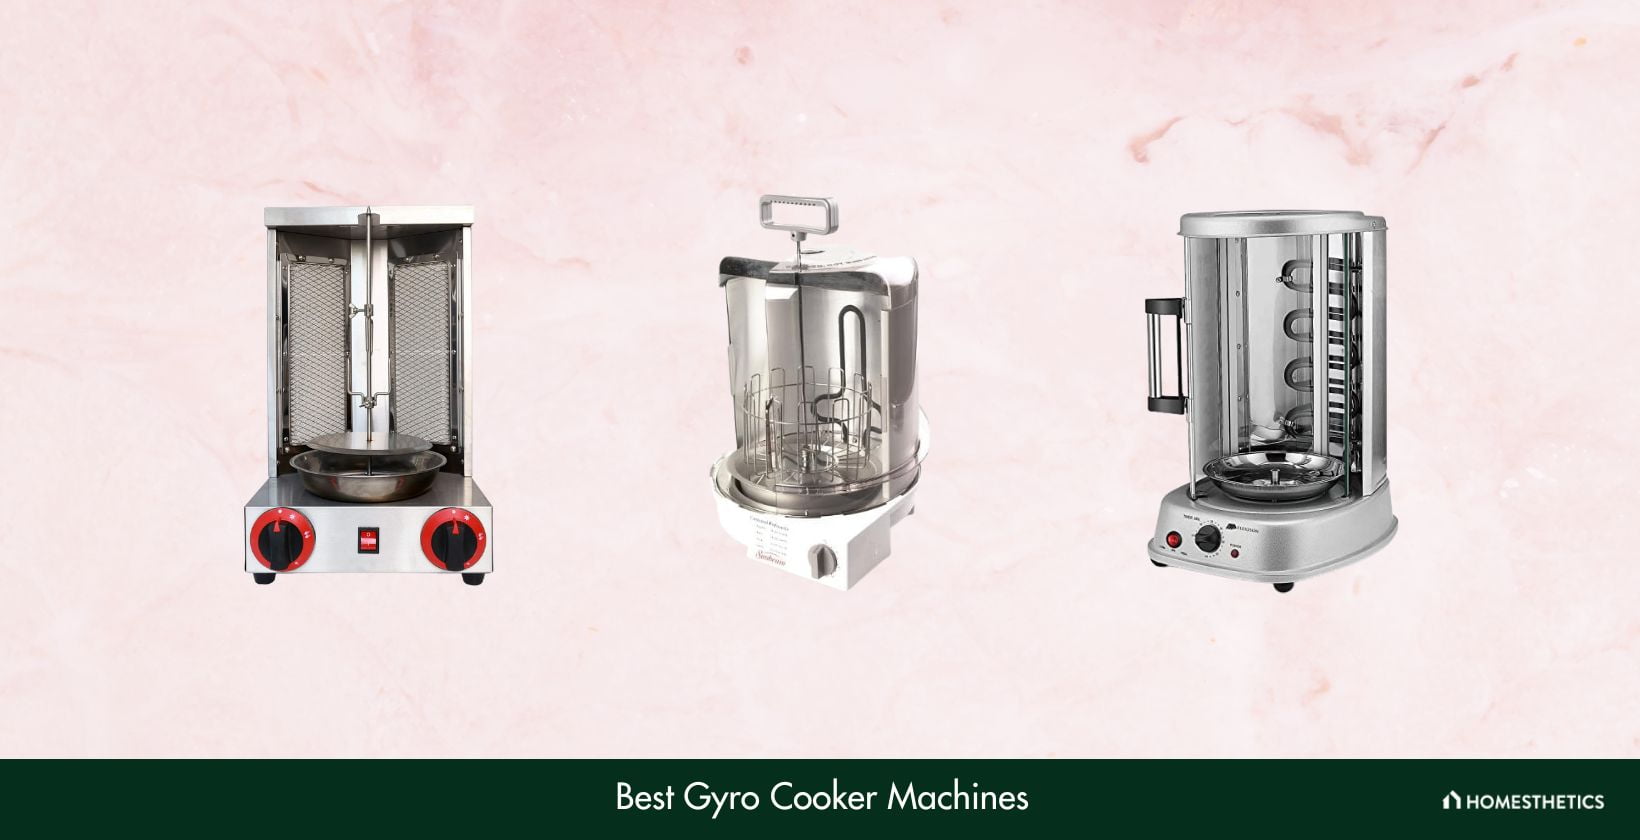 Best Gyro Cooker Machines